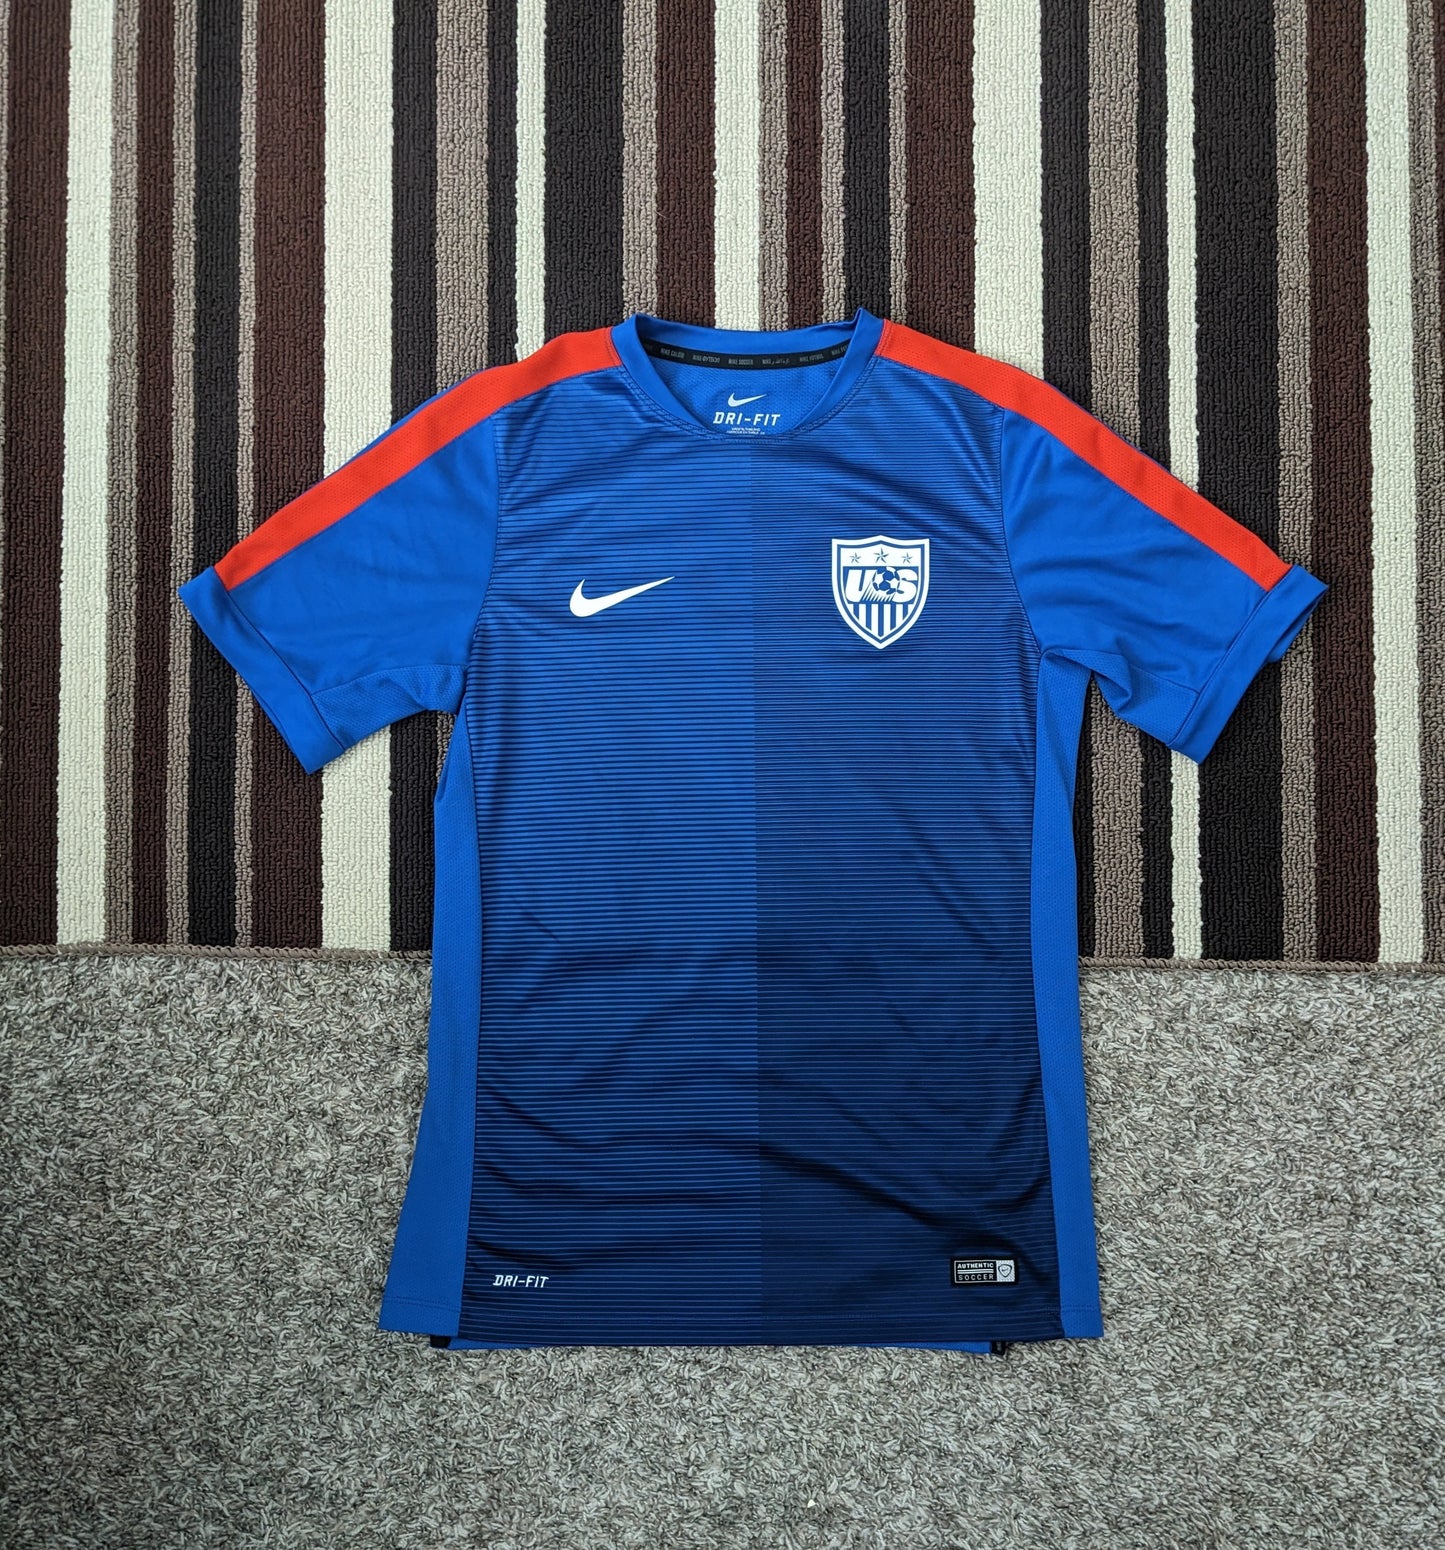 Nike Dri-Fit Sz. Medium USA National Team Soccer Futbol Jersey (M)